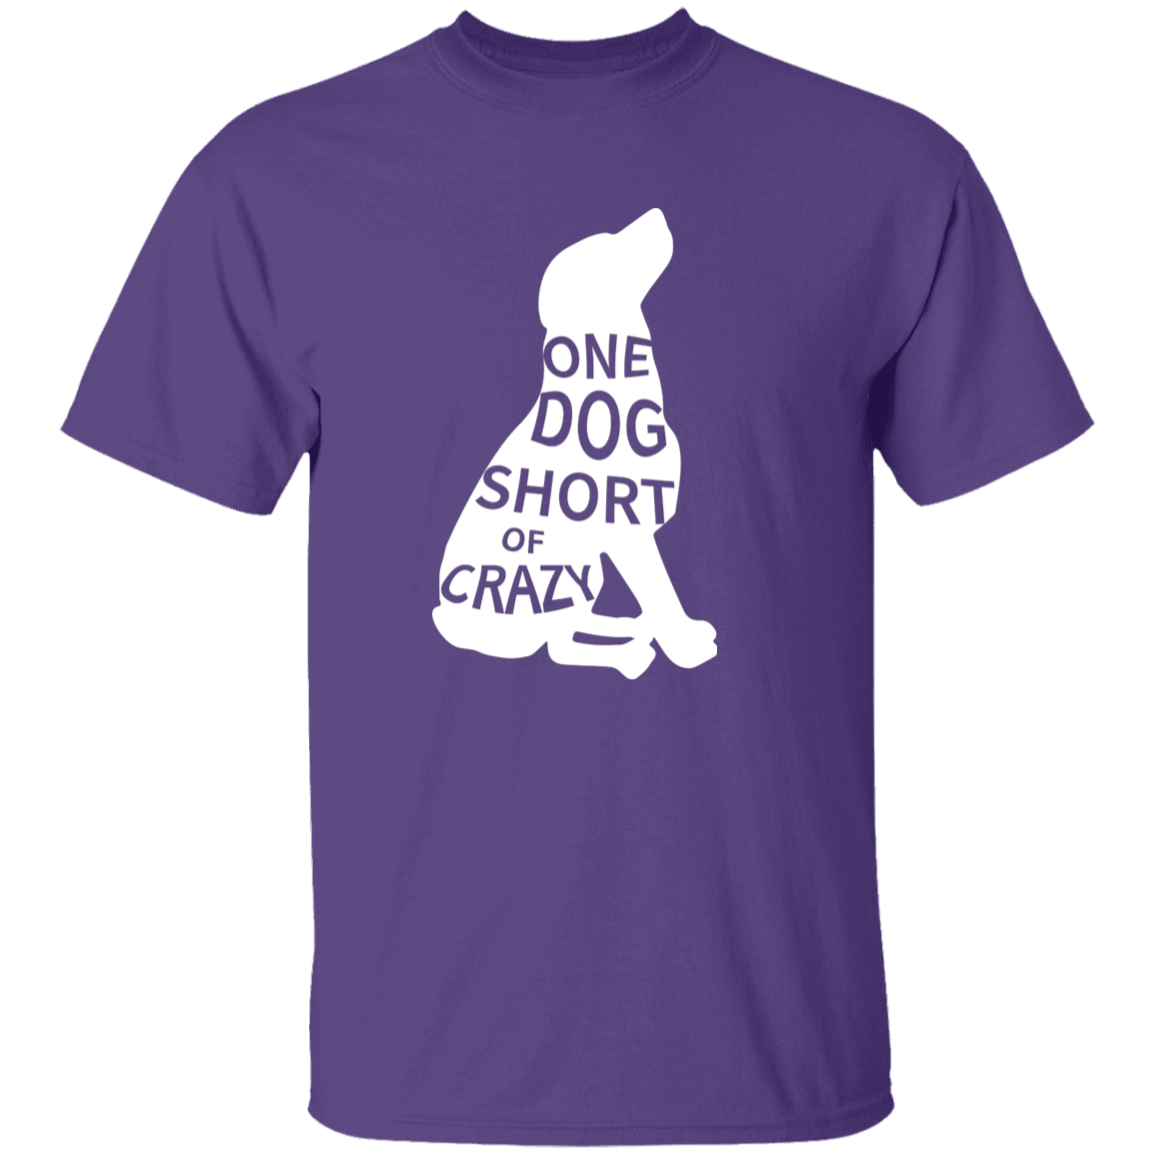 One Dog Short Of Crazy - T Shirt.